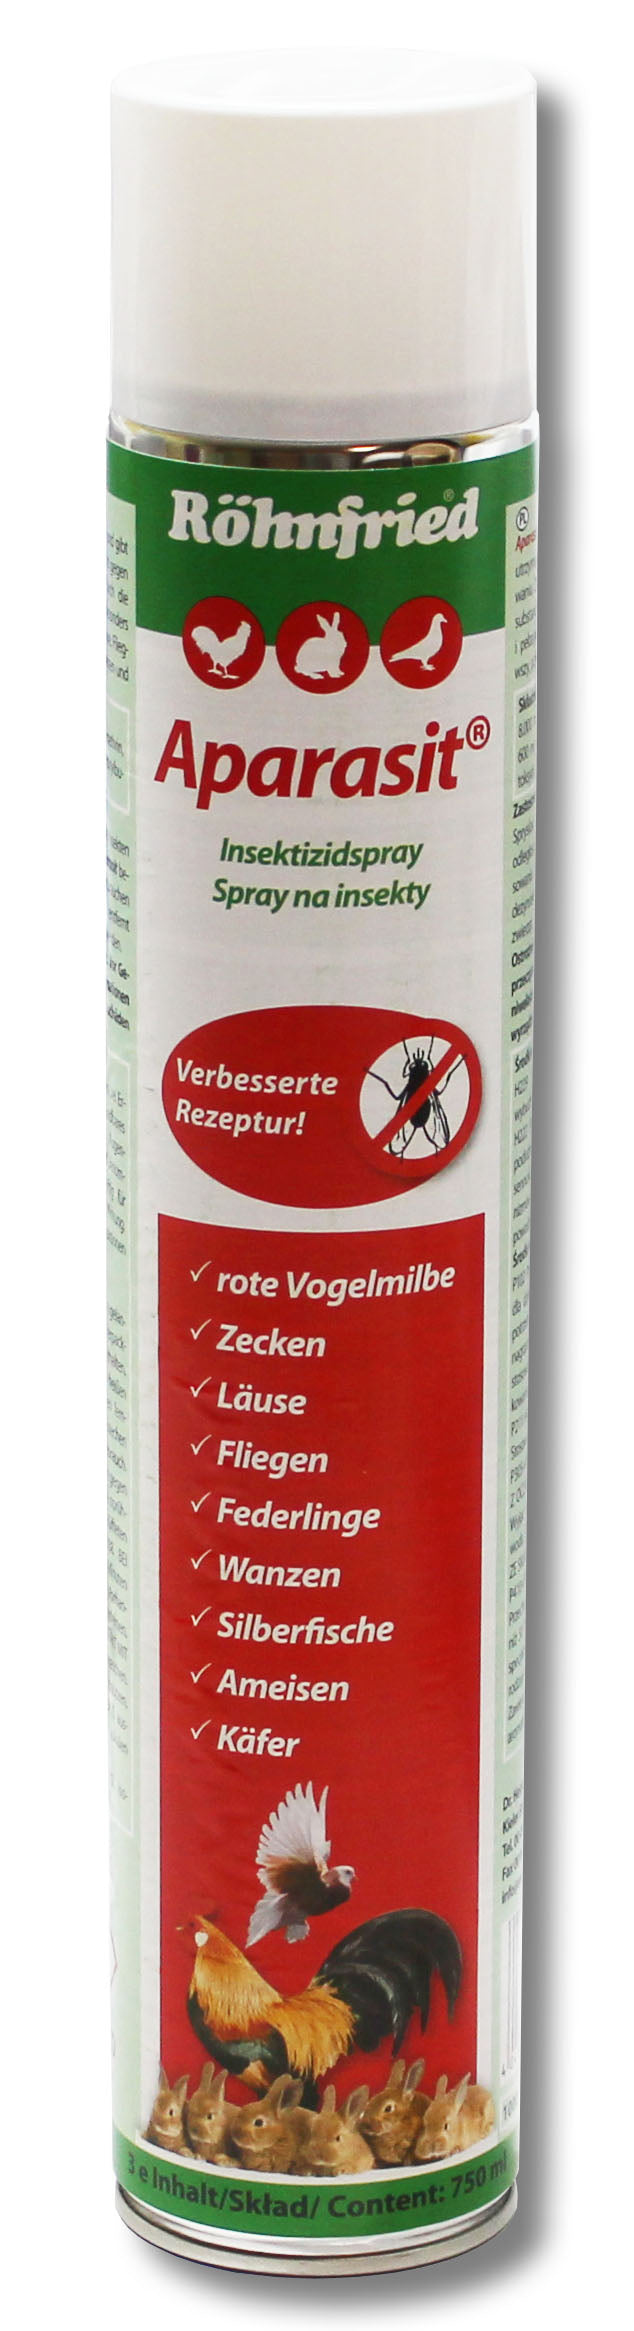 Aparasit-Spray (750ml)